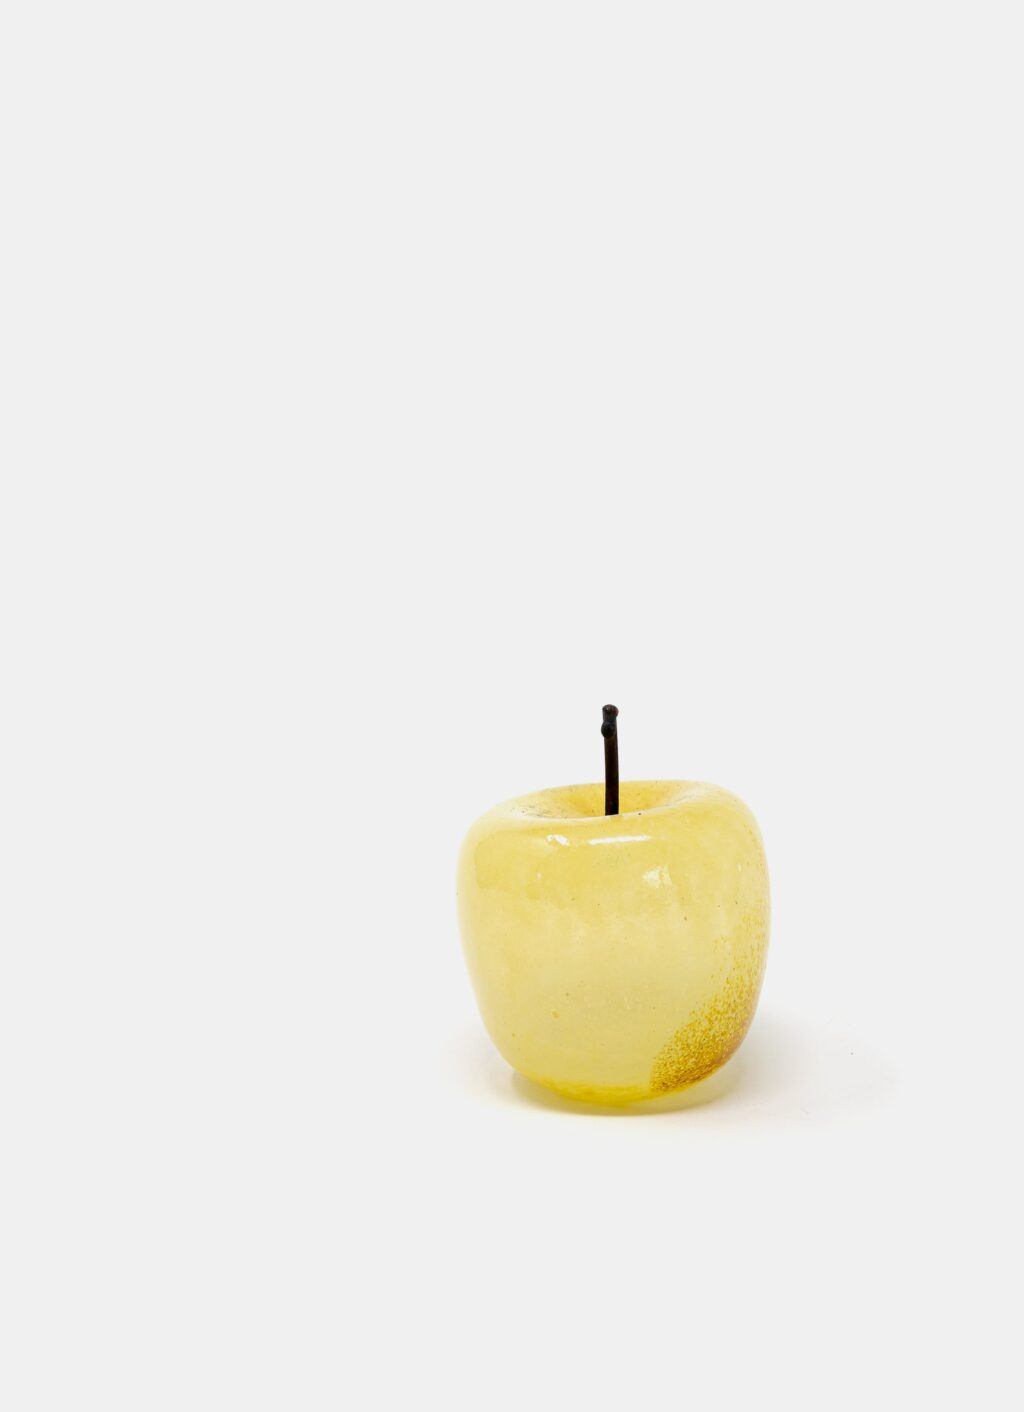 Gunilla Kihlgren - Handblown glass - Apple - yellow